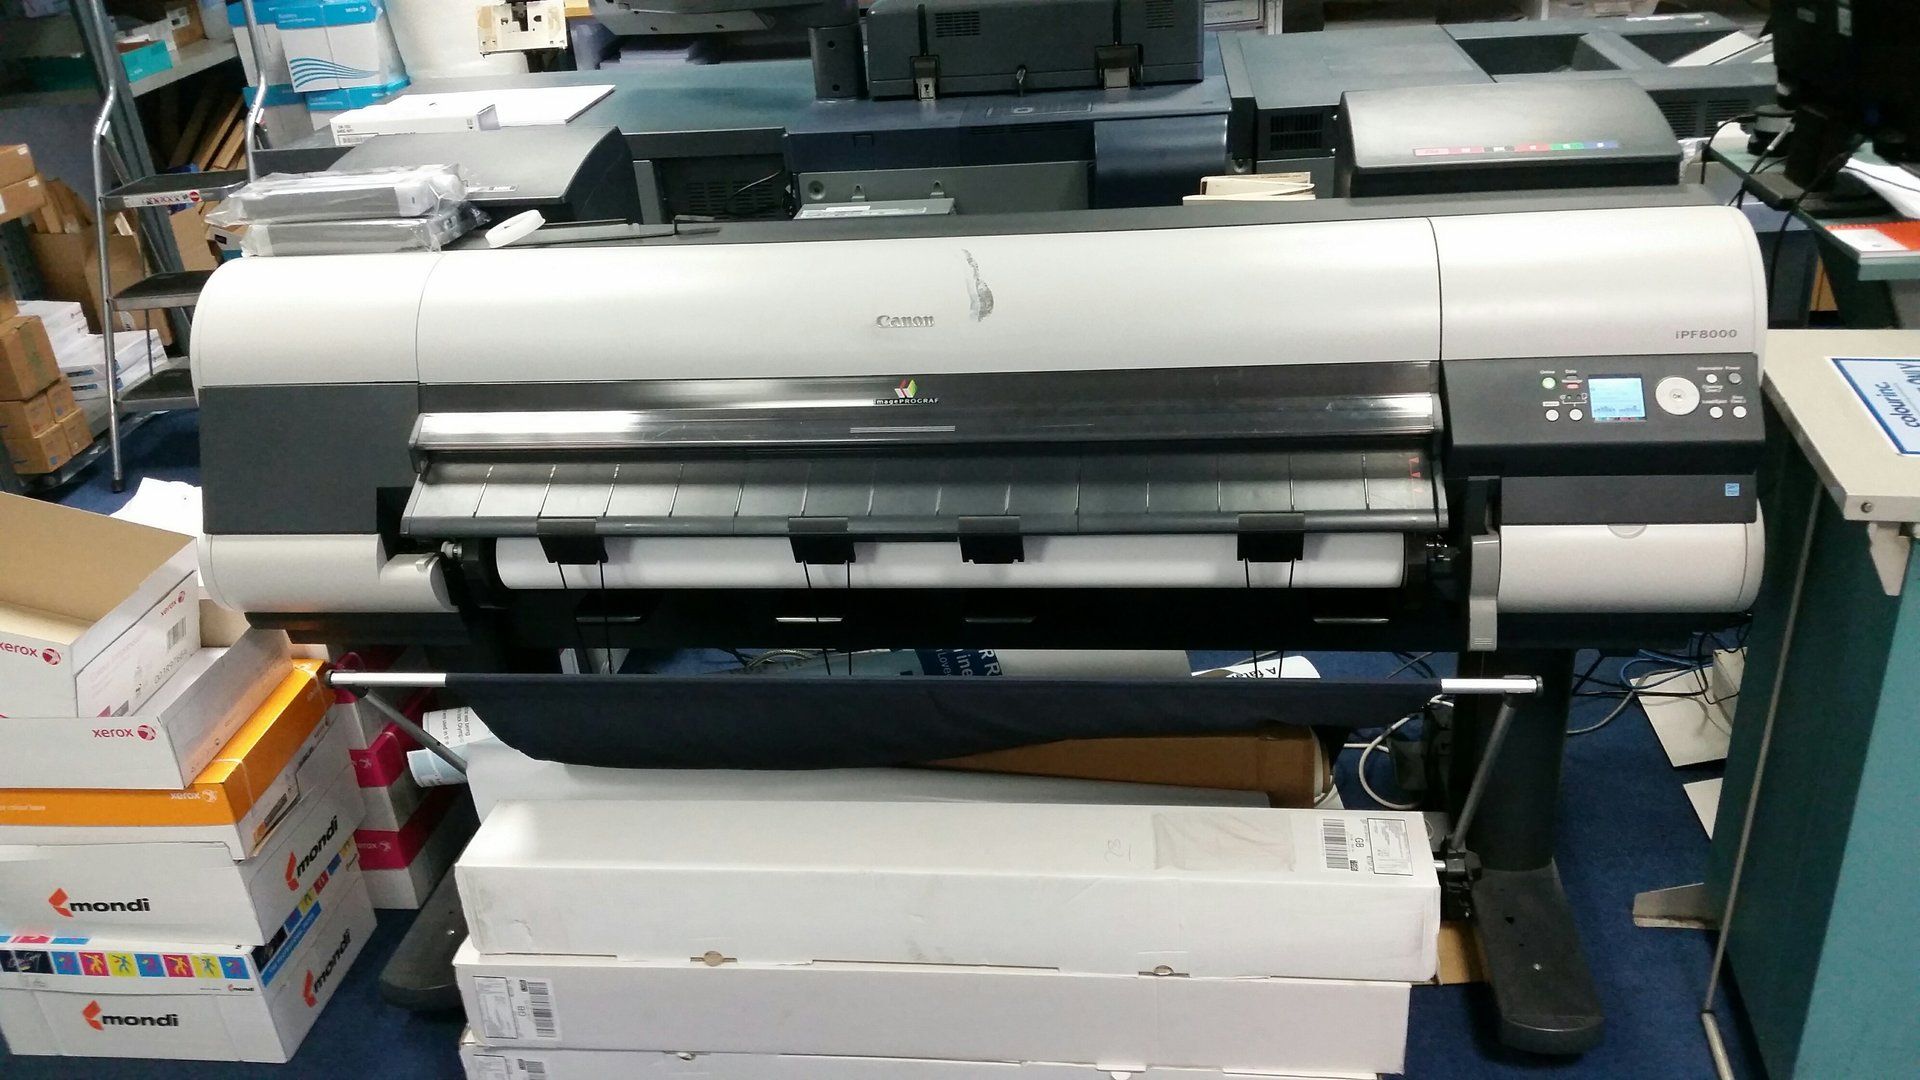 Canon large format printer